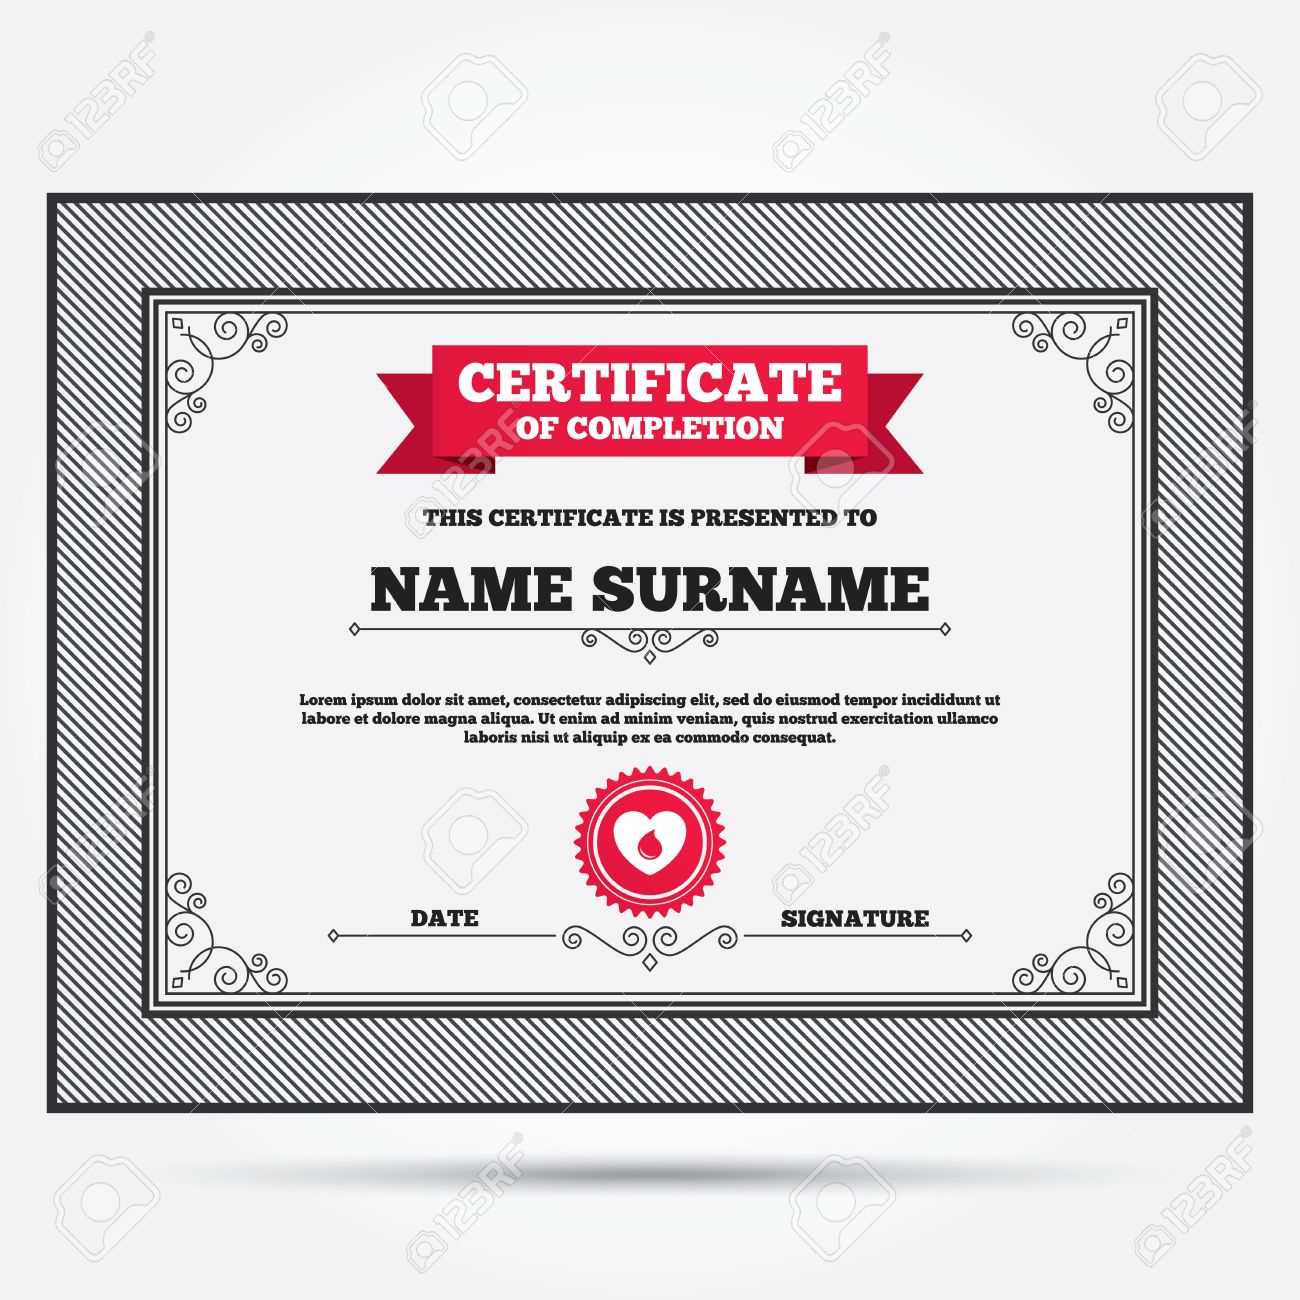 Donation Certificate Template. Certificate Of Completion In Donation Certificate Template